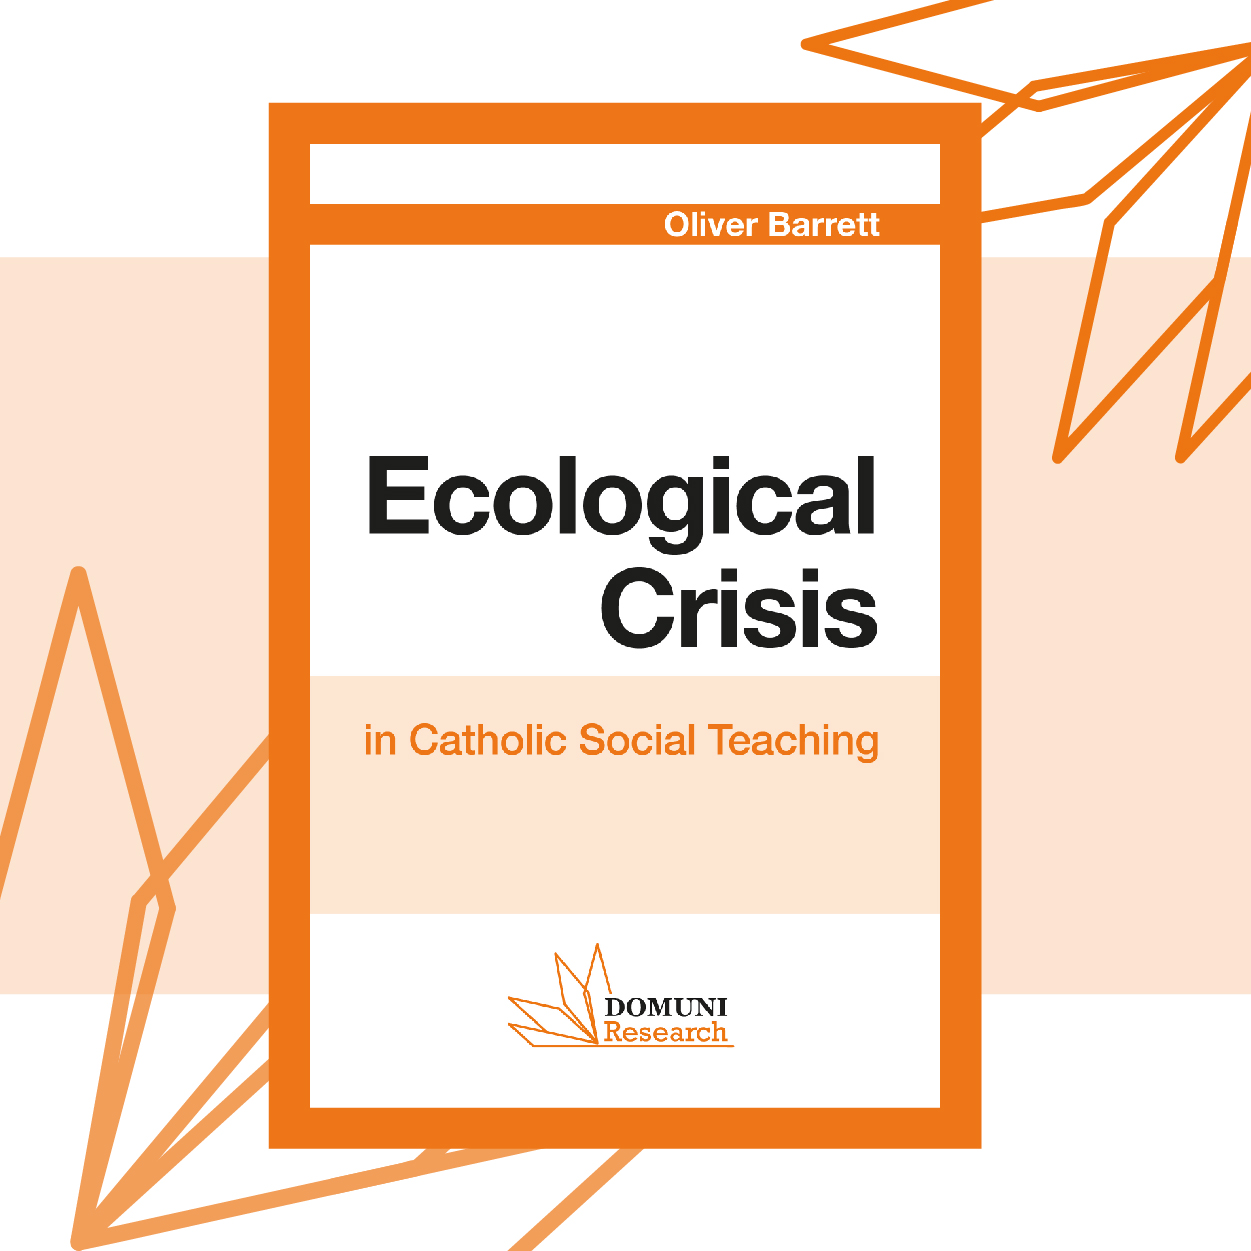 Discover Olivier Barrett’s work “Ecological Crisis in Catholic Social Teaching”